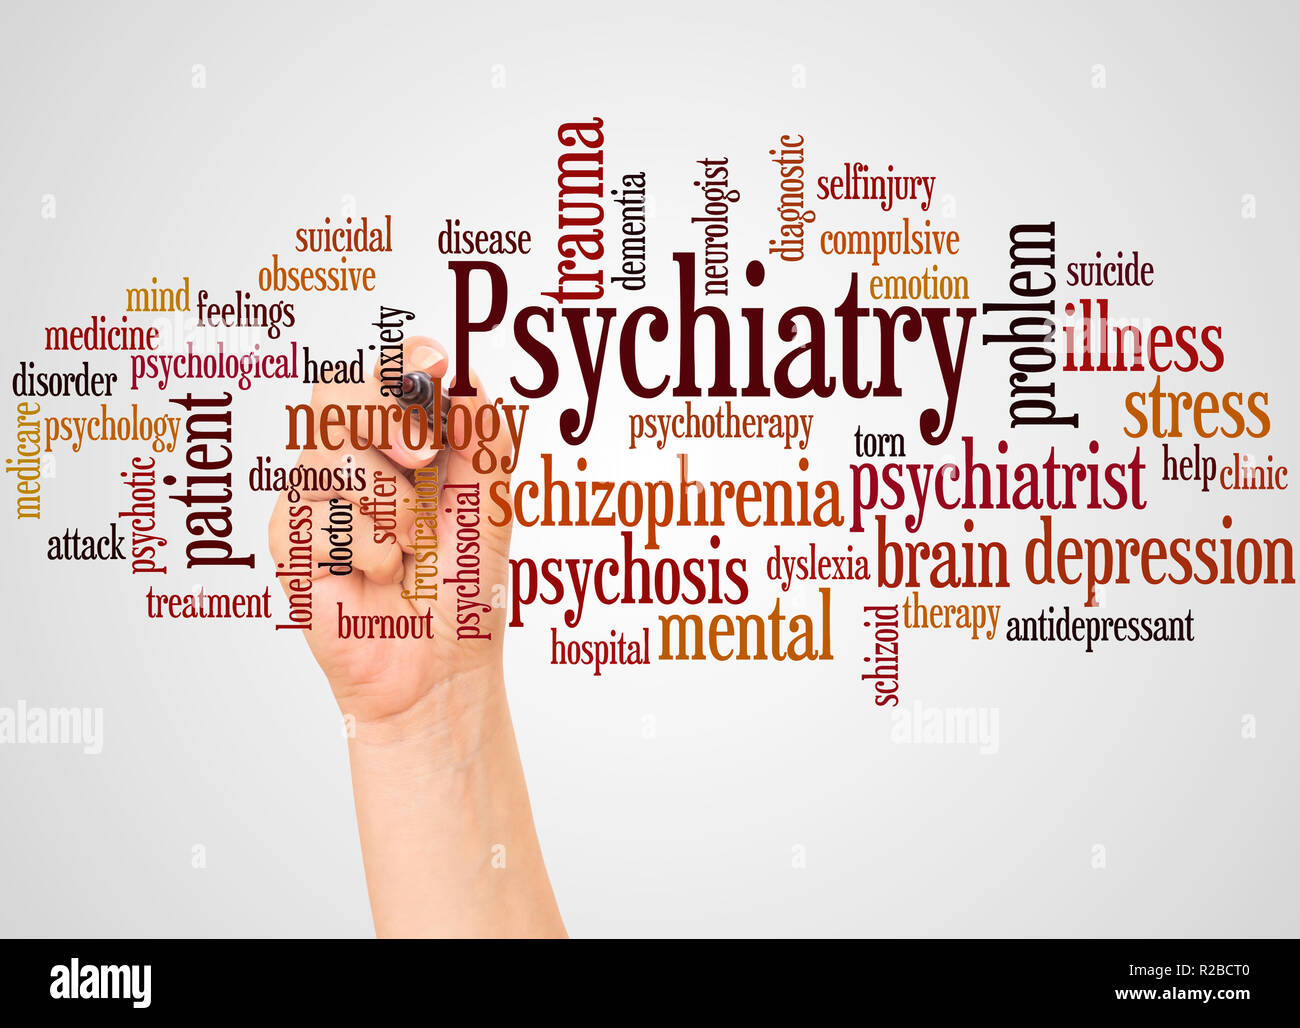 Psychiatry Symbol Stock Photos & Psychiatry Symbol Stock Images - Alamy